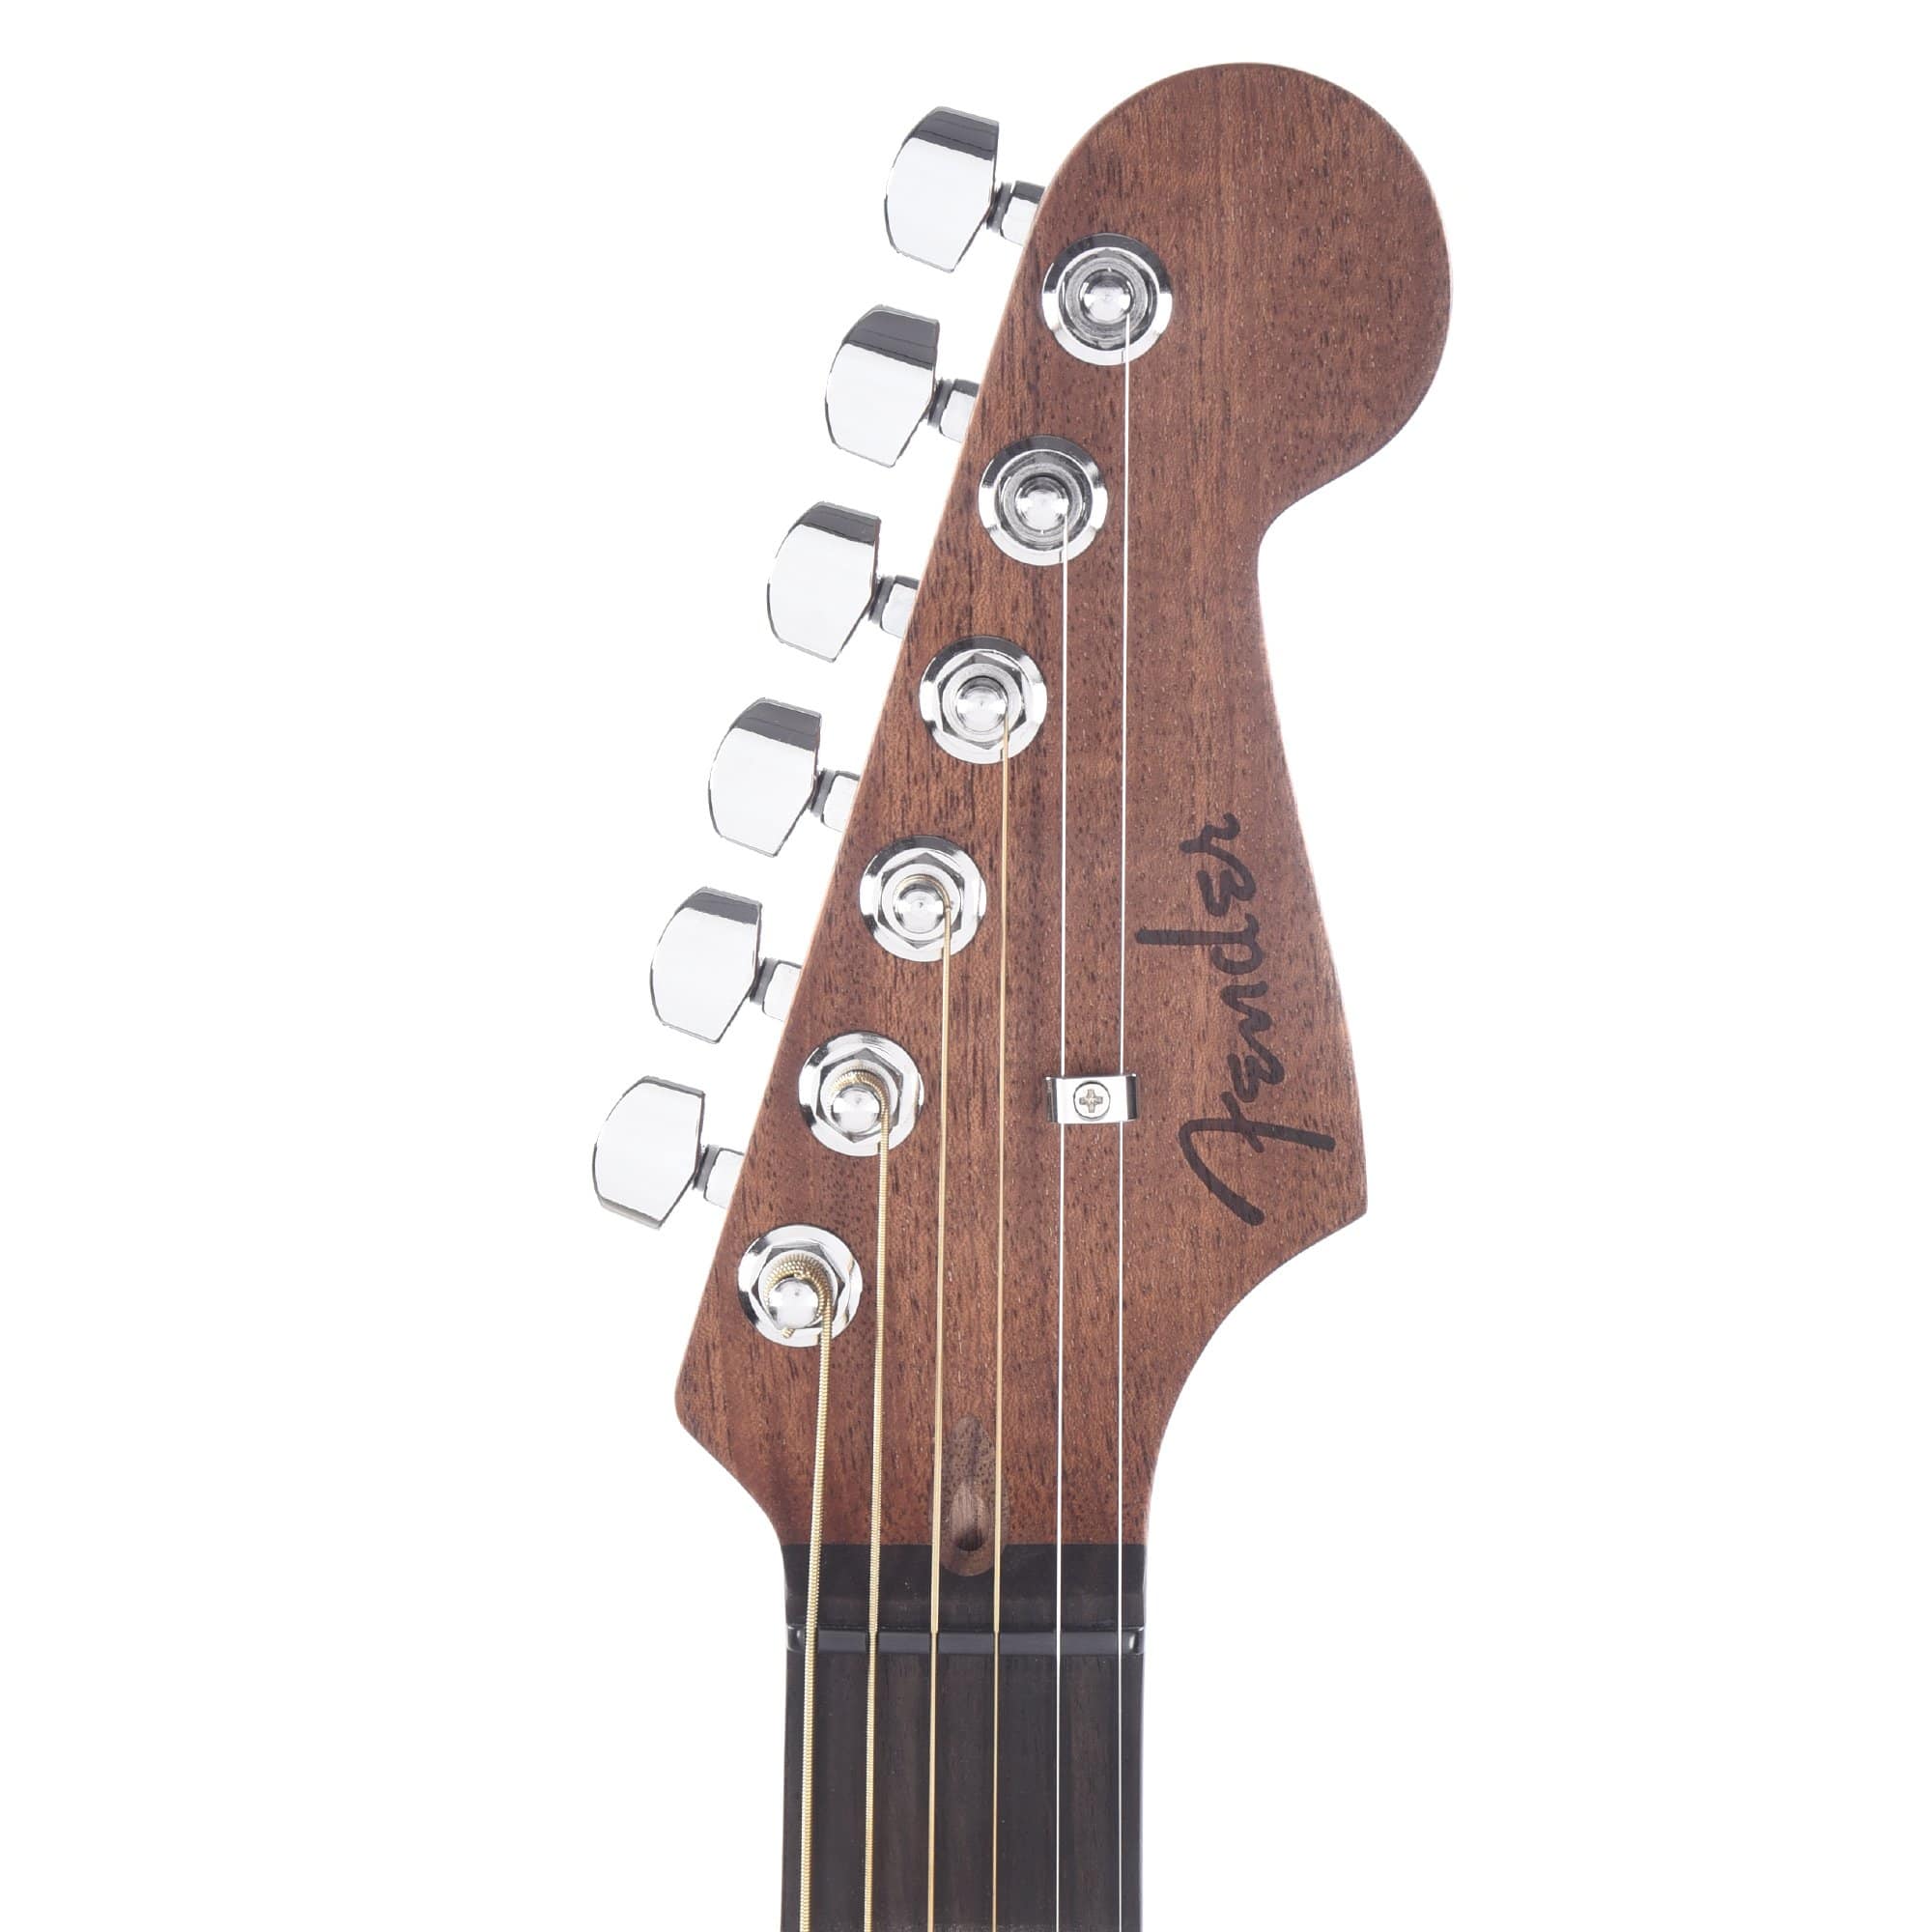 Fender American Acoustasonic Jazzmaster Ocean Turquoise Acoustic Guitars / Built-in Electronics